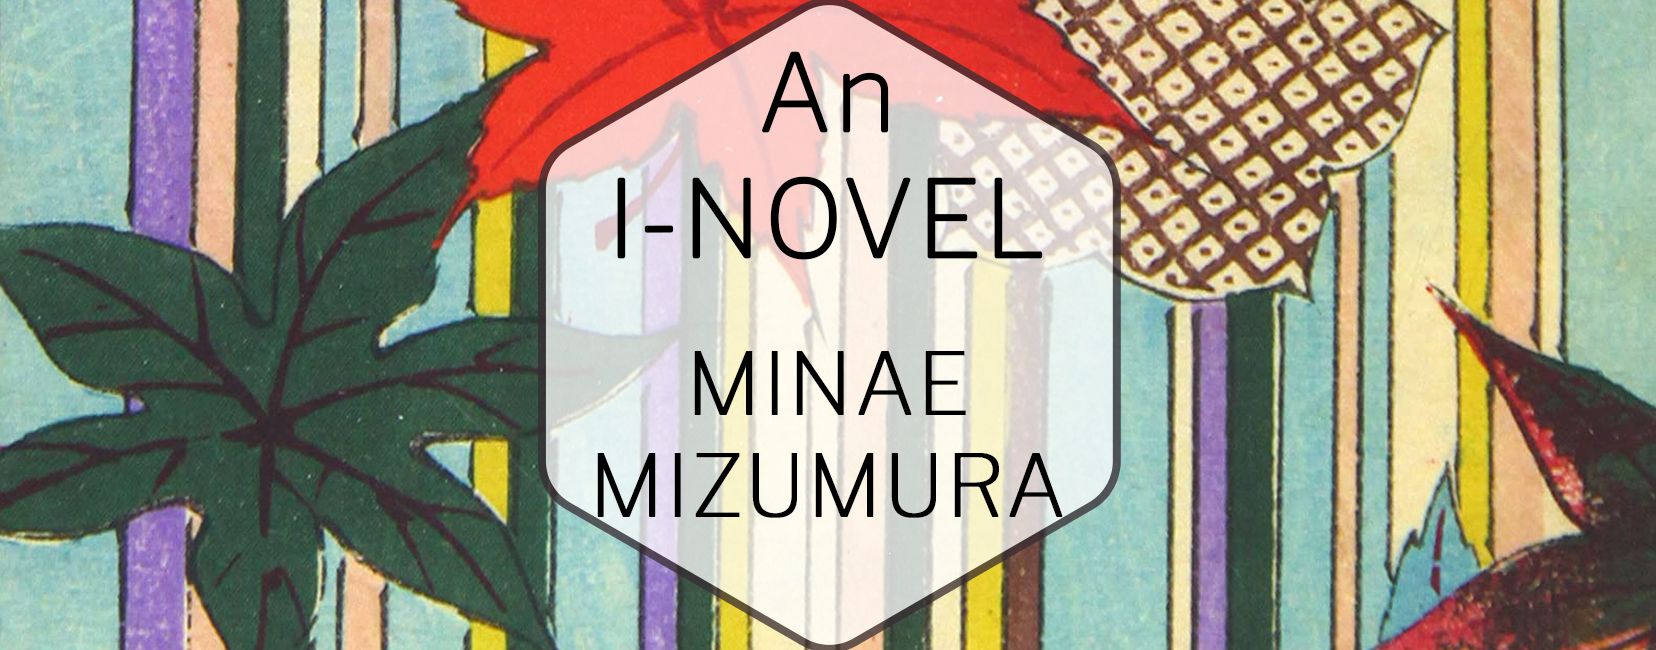 An I-Novel by Minae Mizumura translated by Juliet Winters Carpenter